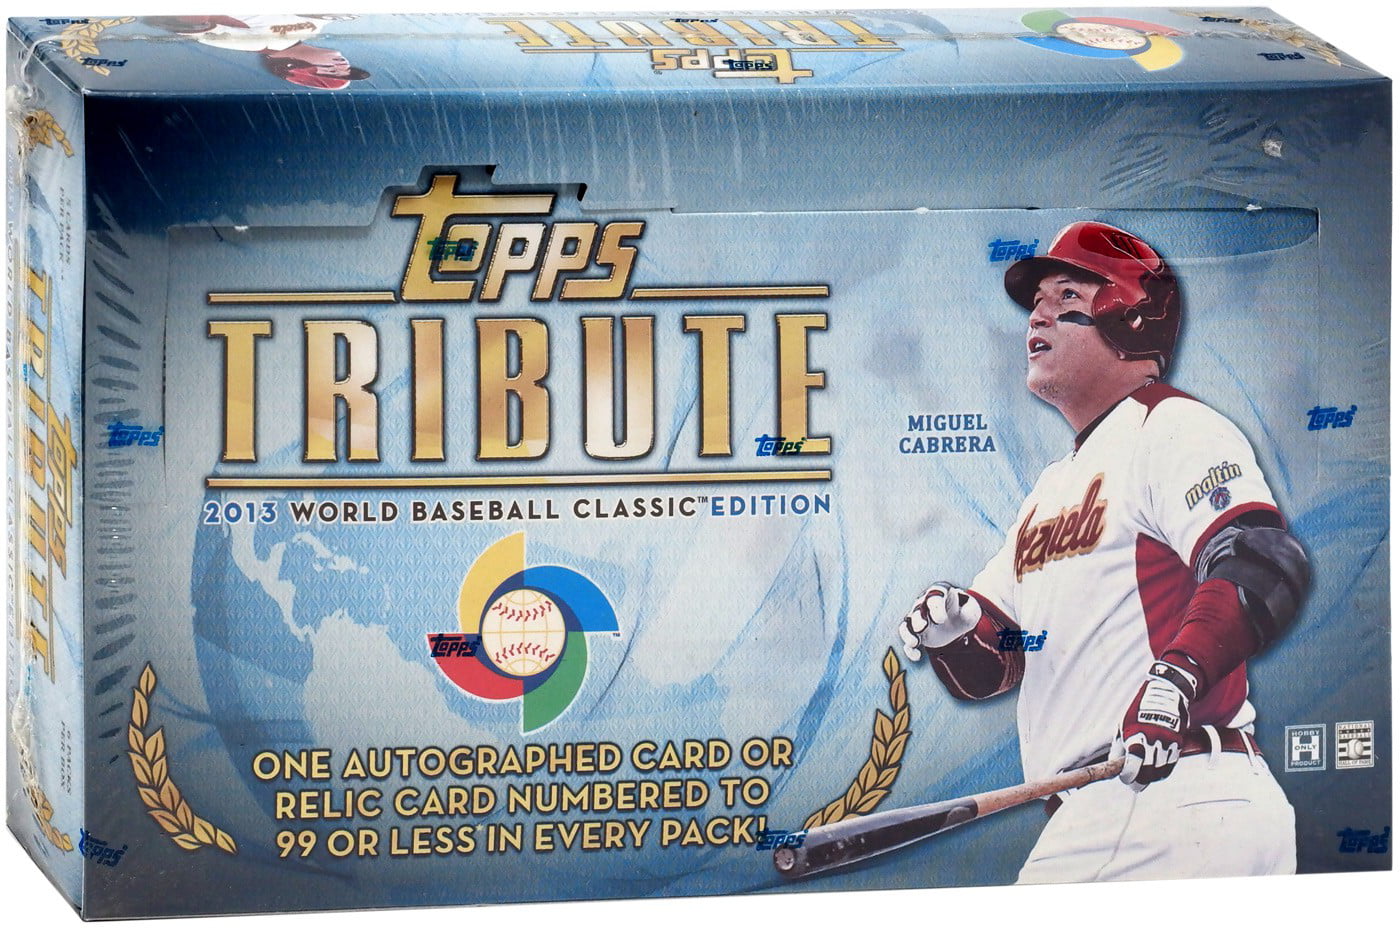 MLB Topps 2013 Tribute World Baseball Classic Edition Trading Card